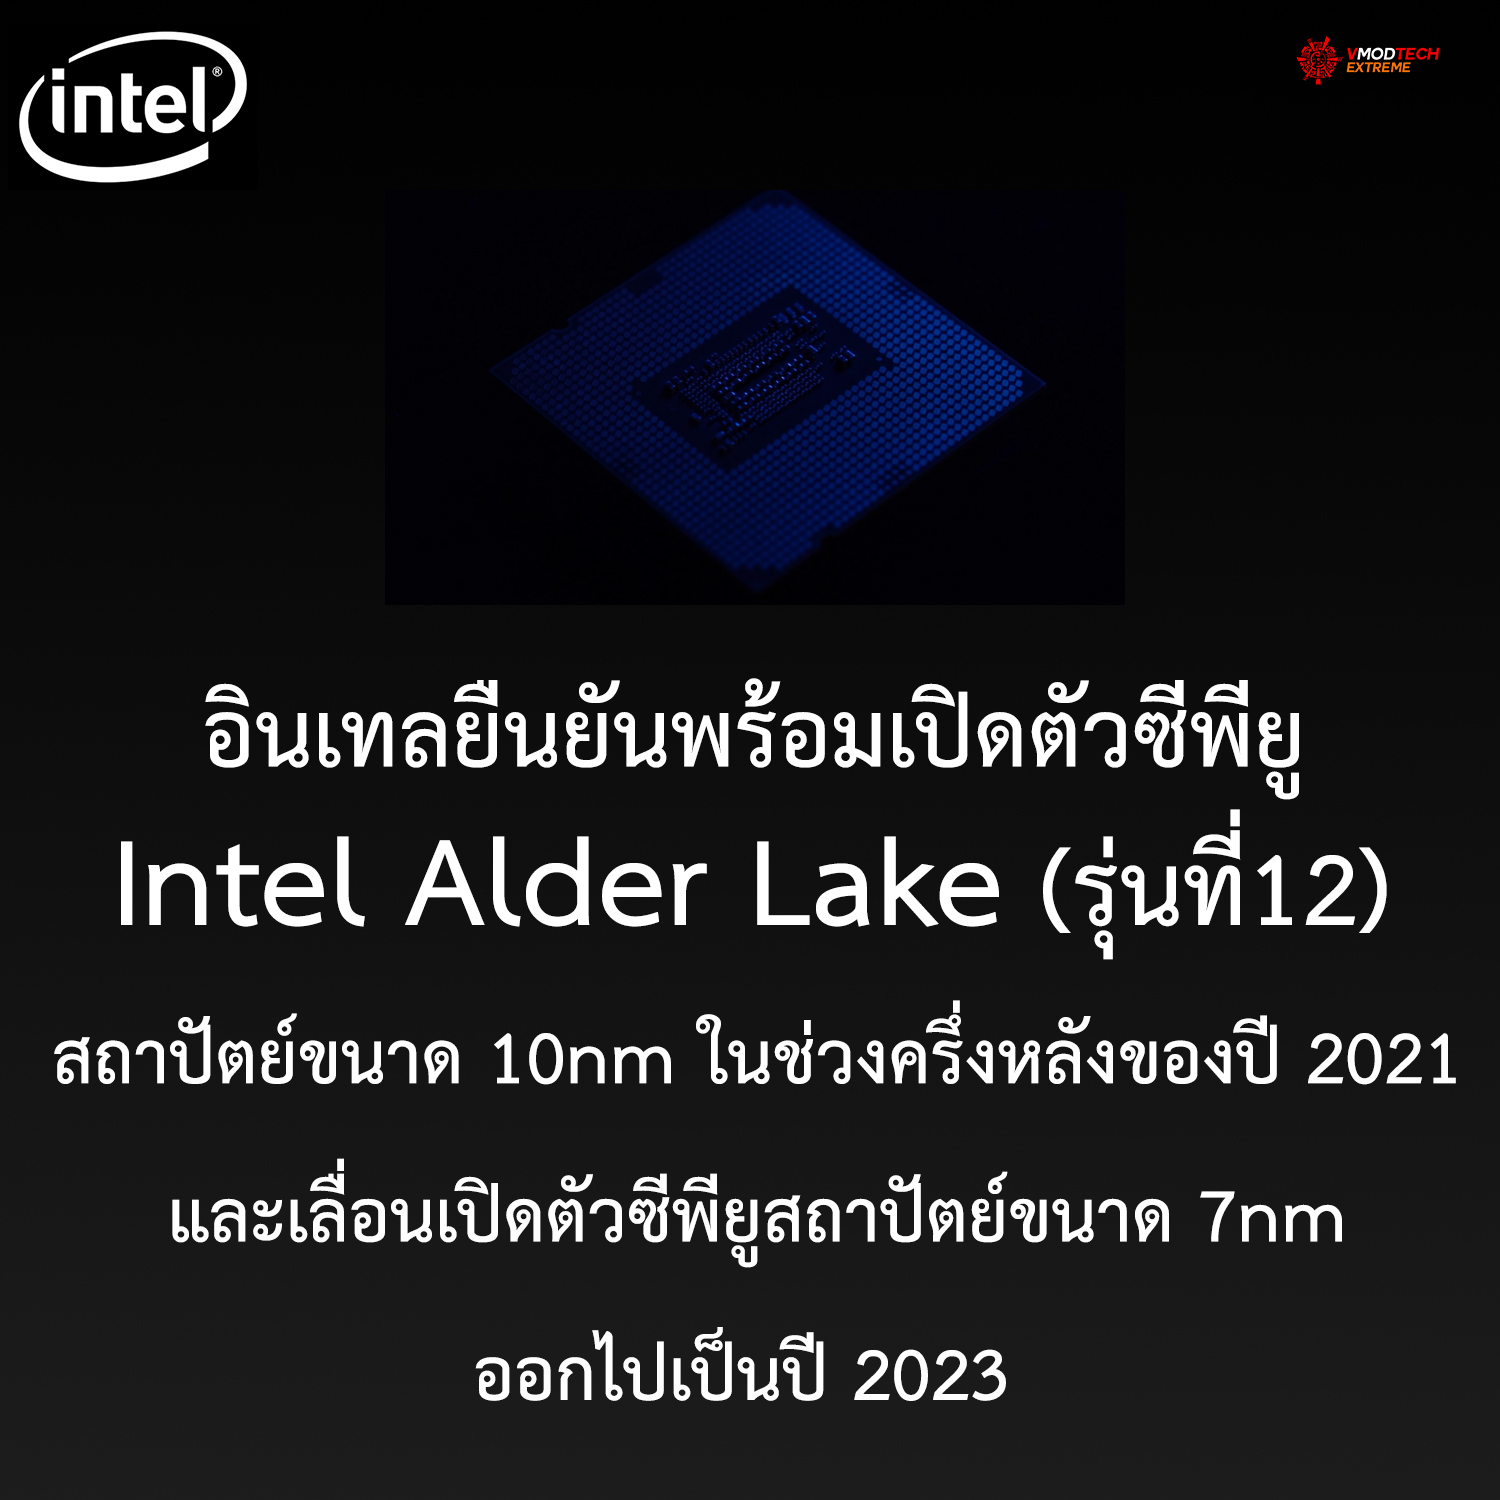 intel alder lake 10nm h2 2021 อินเทลยืนยันพร้อมเปิดตัวซีพียู Intel Alder Lake สถาปัตย์ขนาด 10nm ในช่วงครึ่งหลังของปี 2021 และซีพียูสถาปัตย์ขนาด 7nm เลื่อนเปิดตัวไปปี 2023  